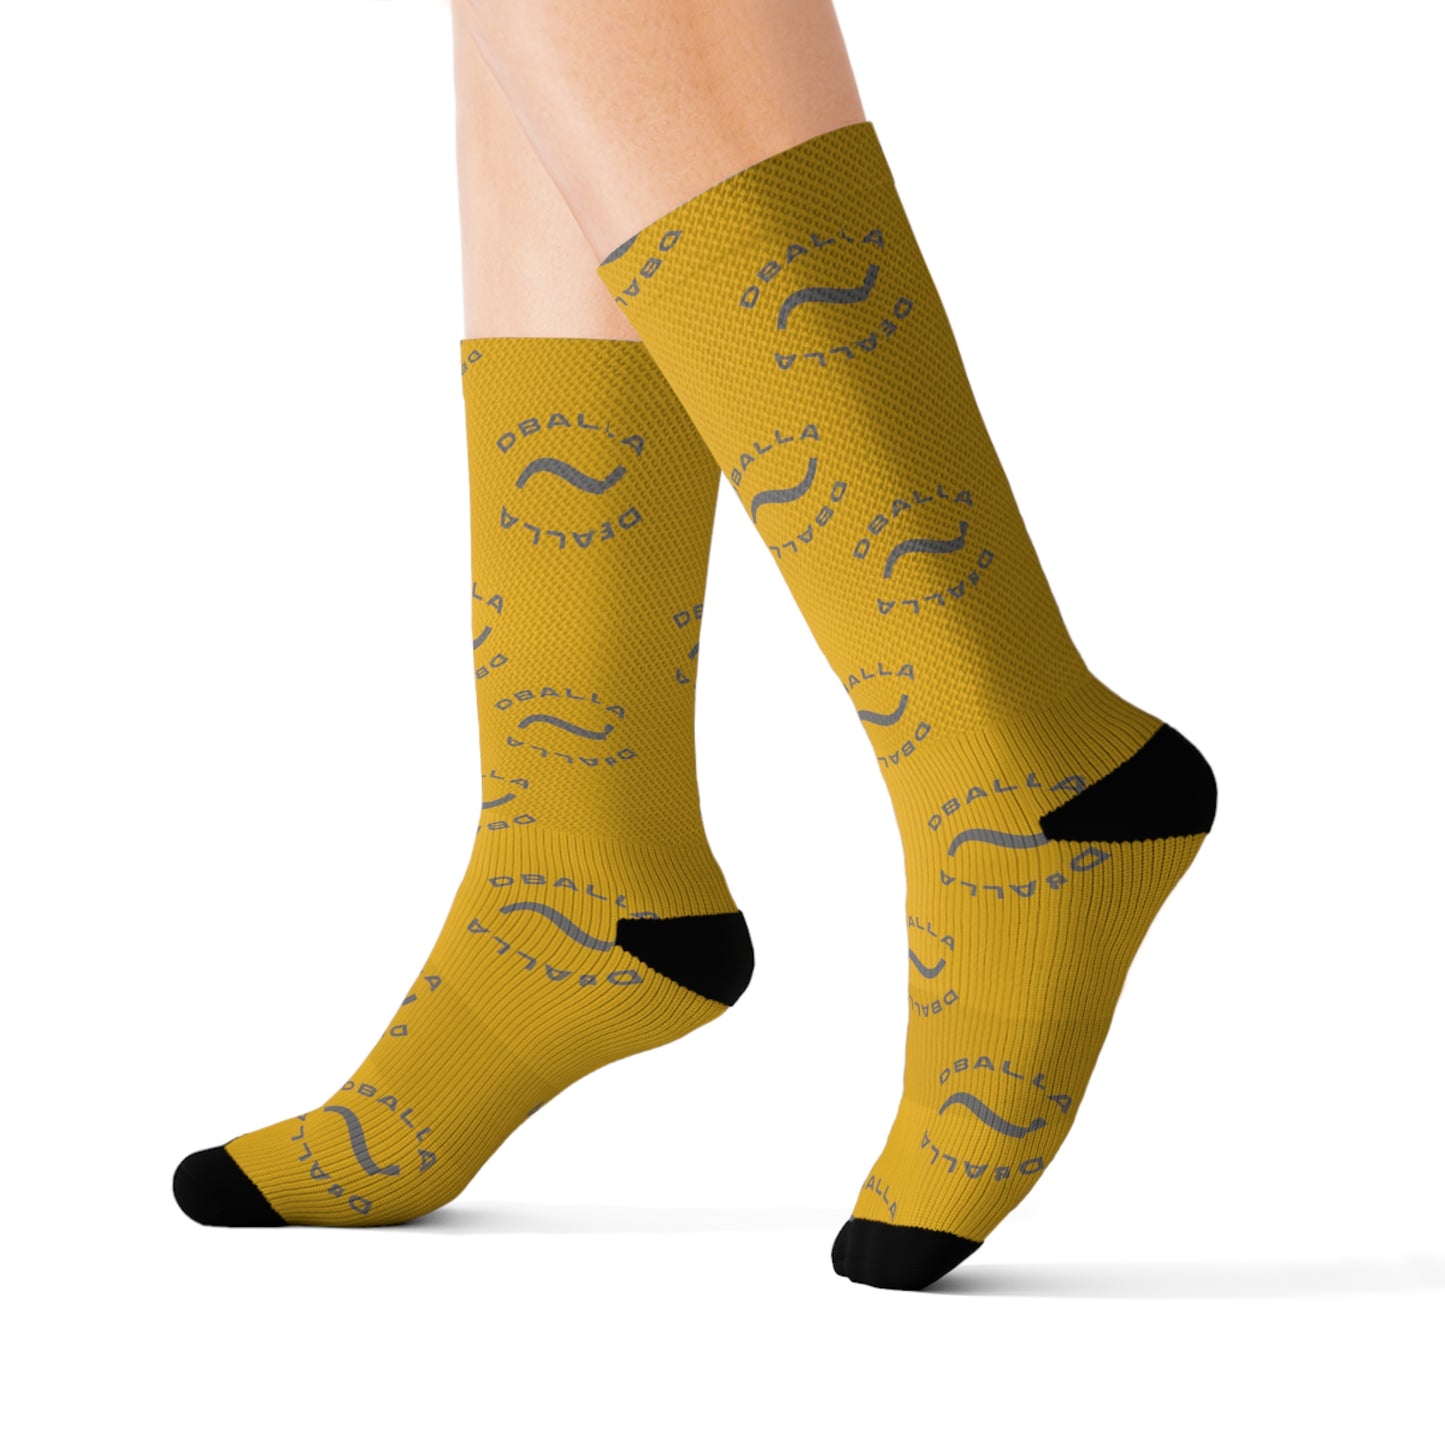 THE FOOTBALLA Socks - Yellow